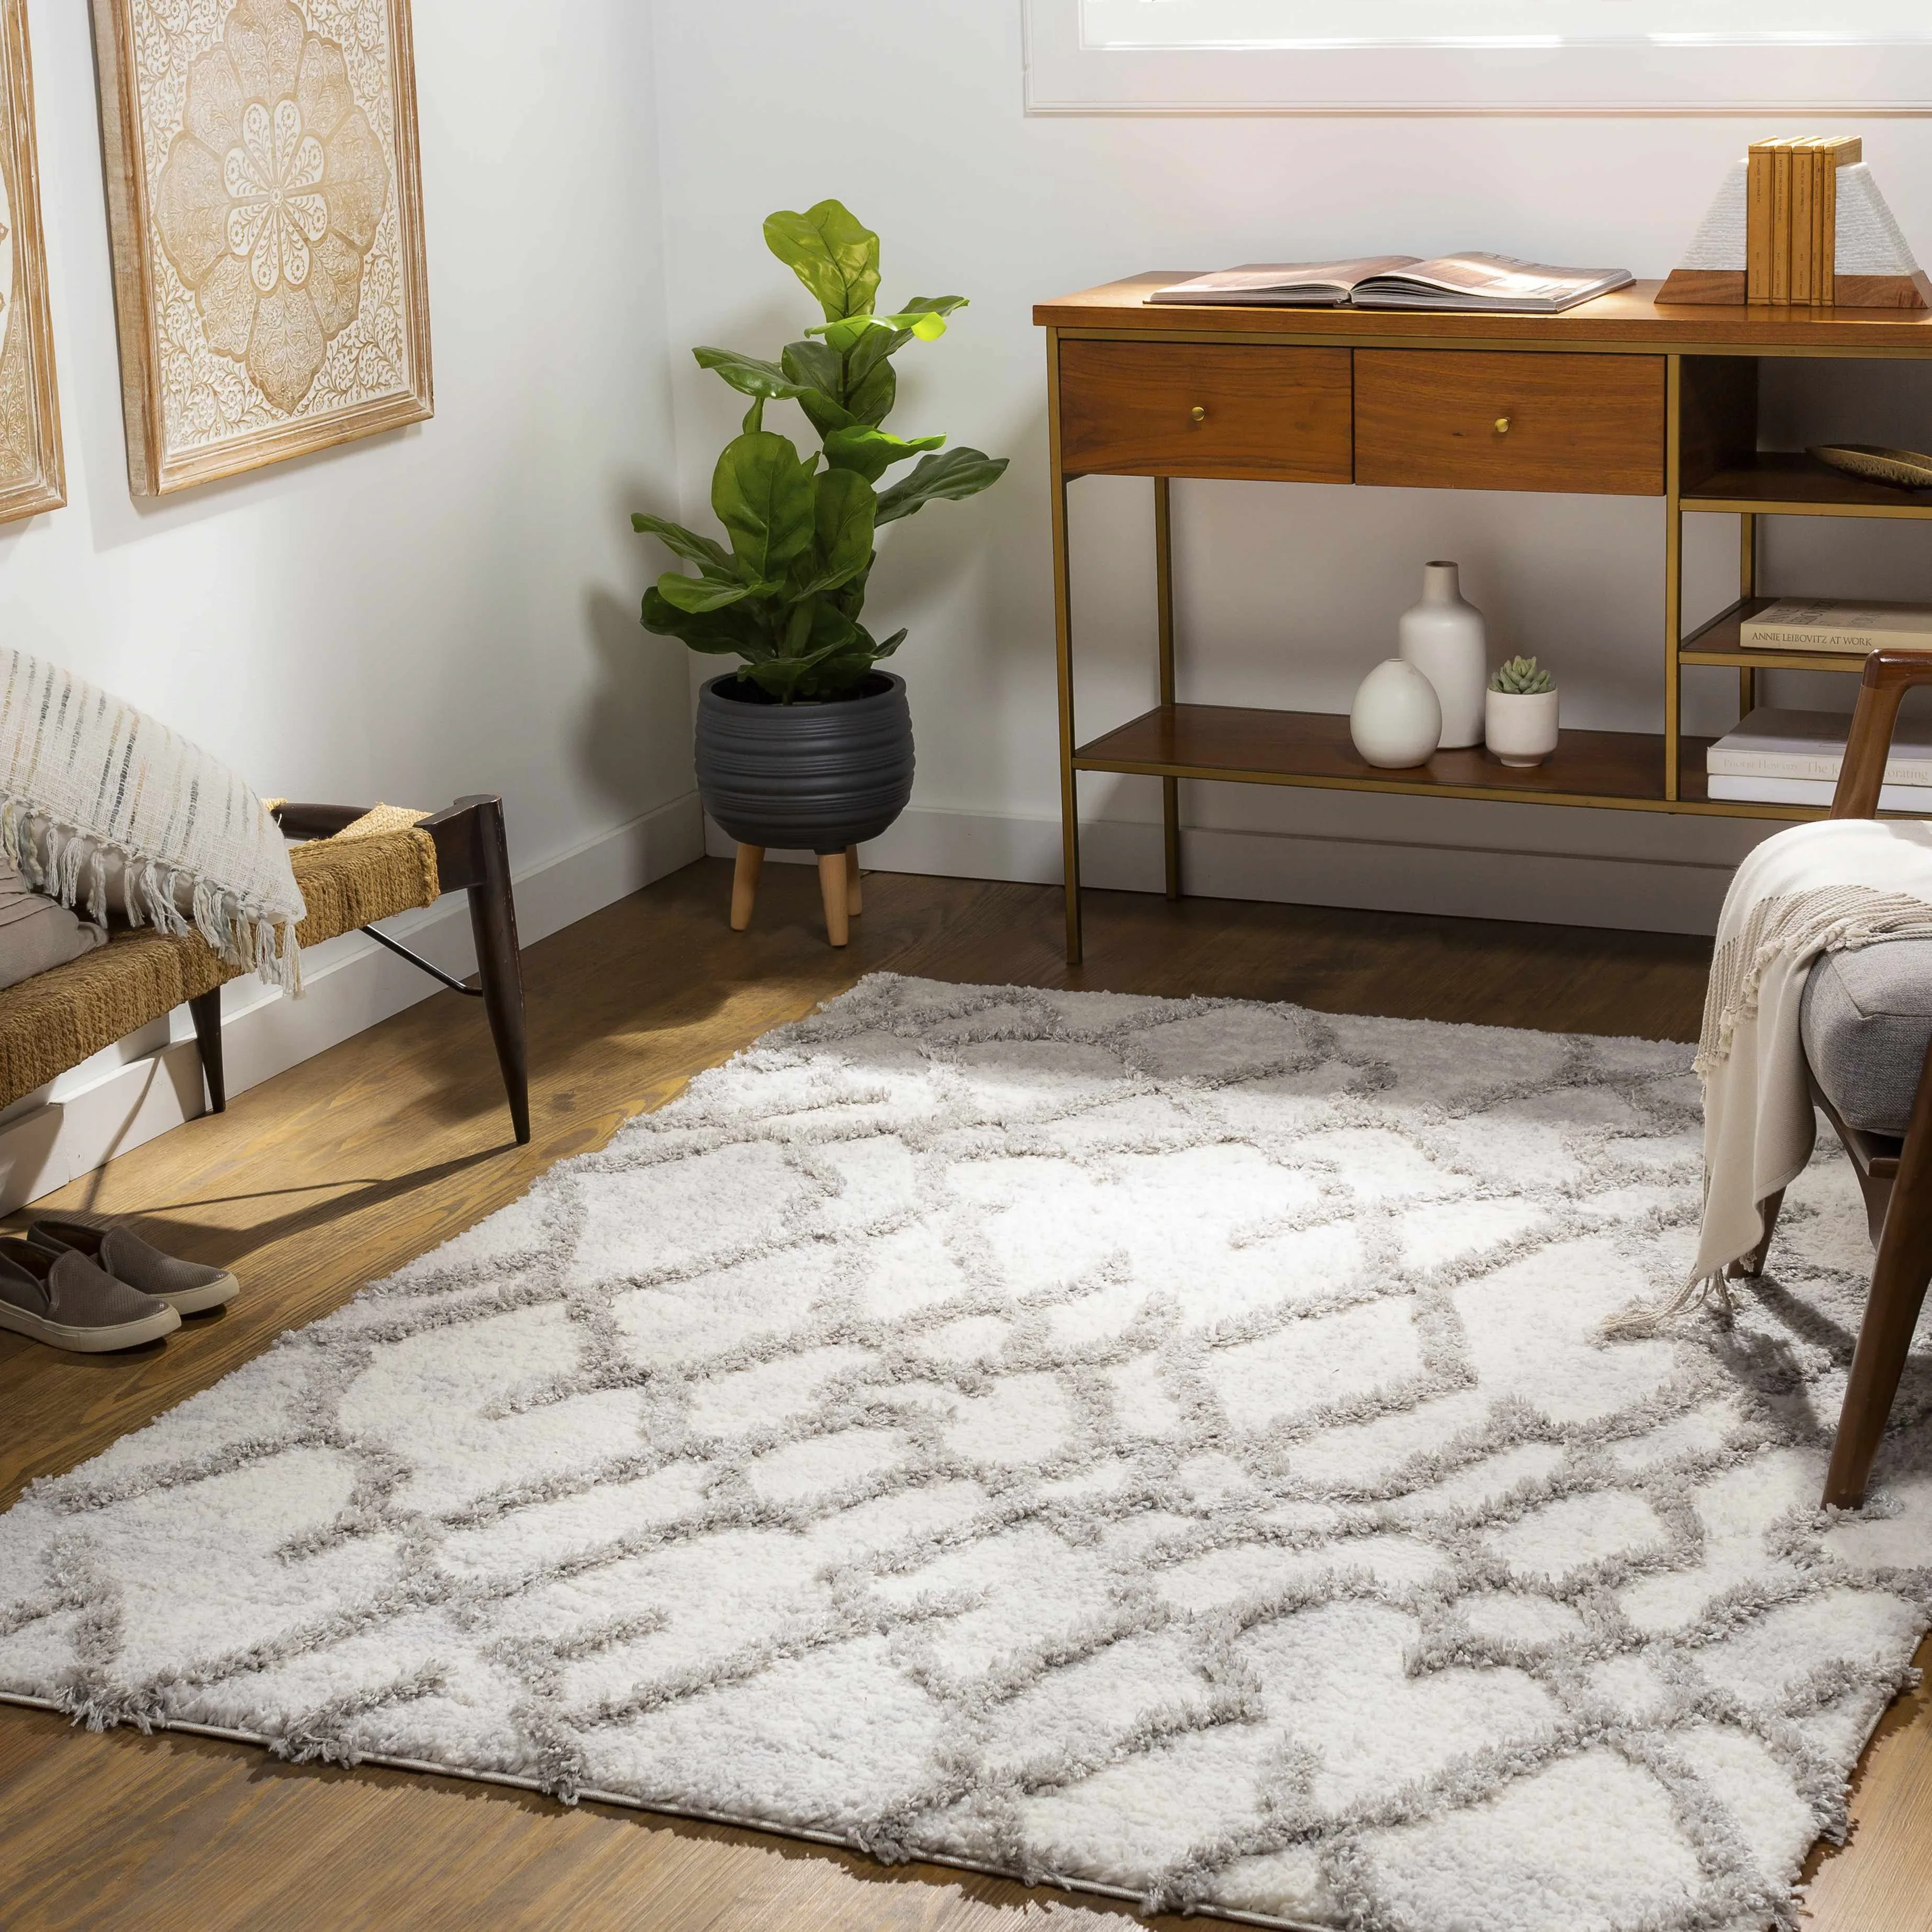 Deep Pile Flokati Beige Area Carpet Soft High Quality Rug Stylish Home Space Mat 